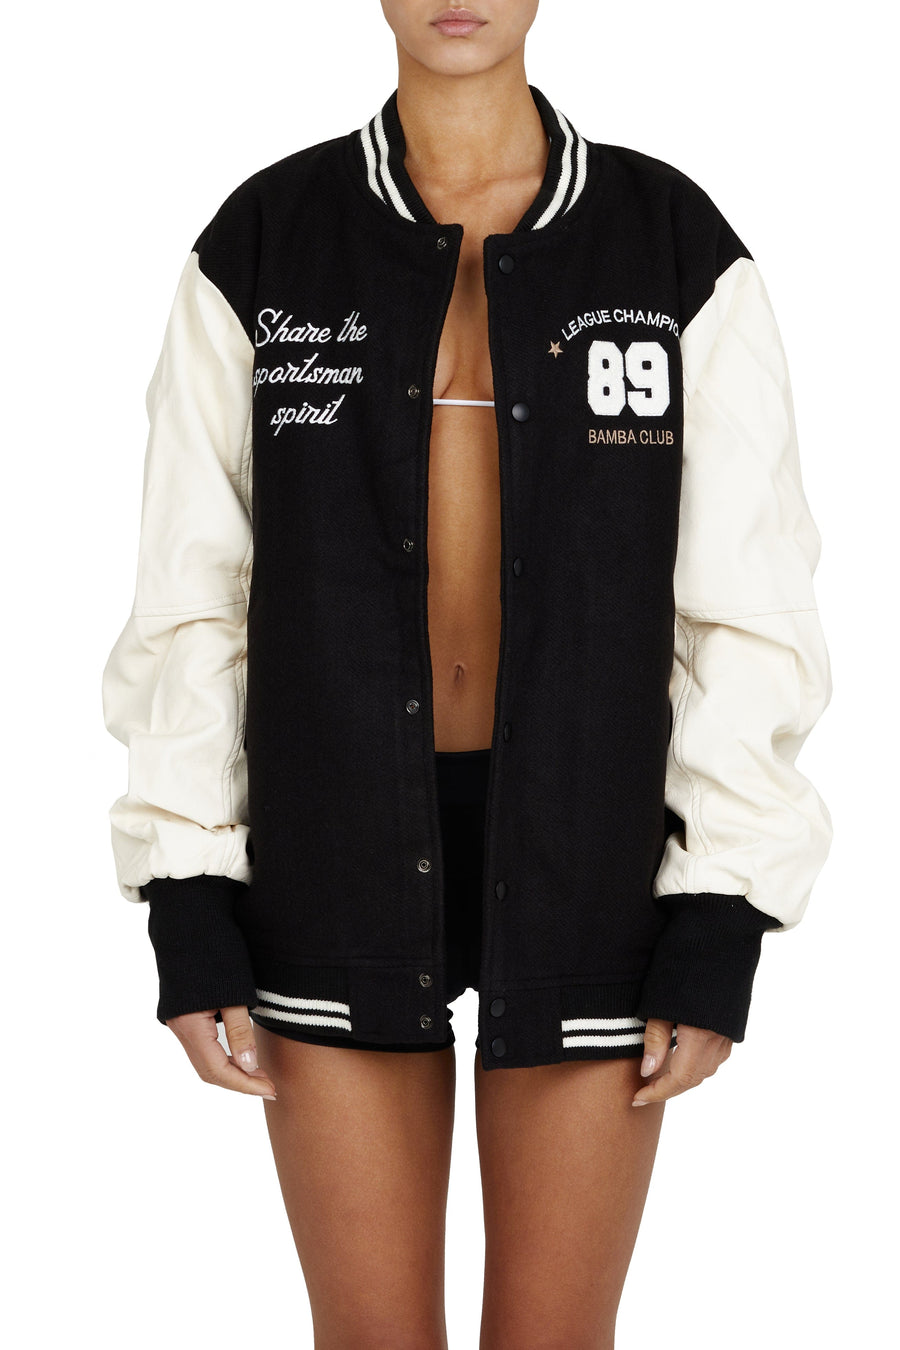 BAMBA LEAGUE 89’ Varsity Jacket  -  CLOTHING  -  B Ā M B A S W I M